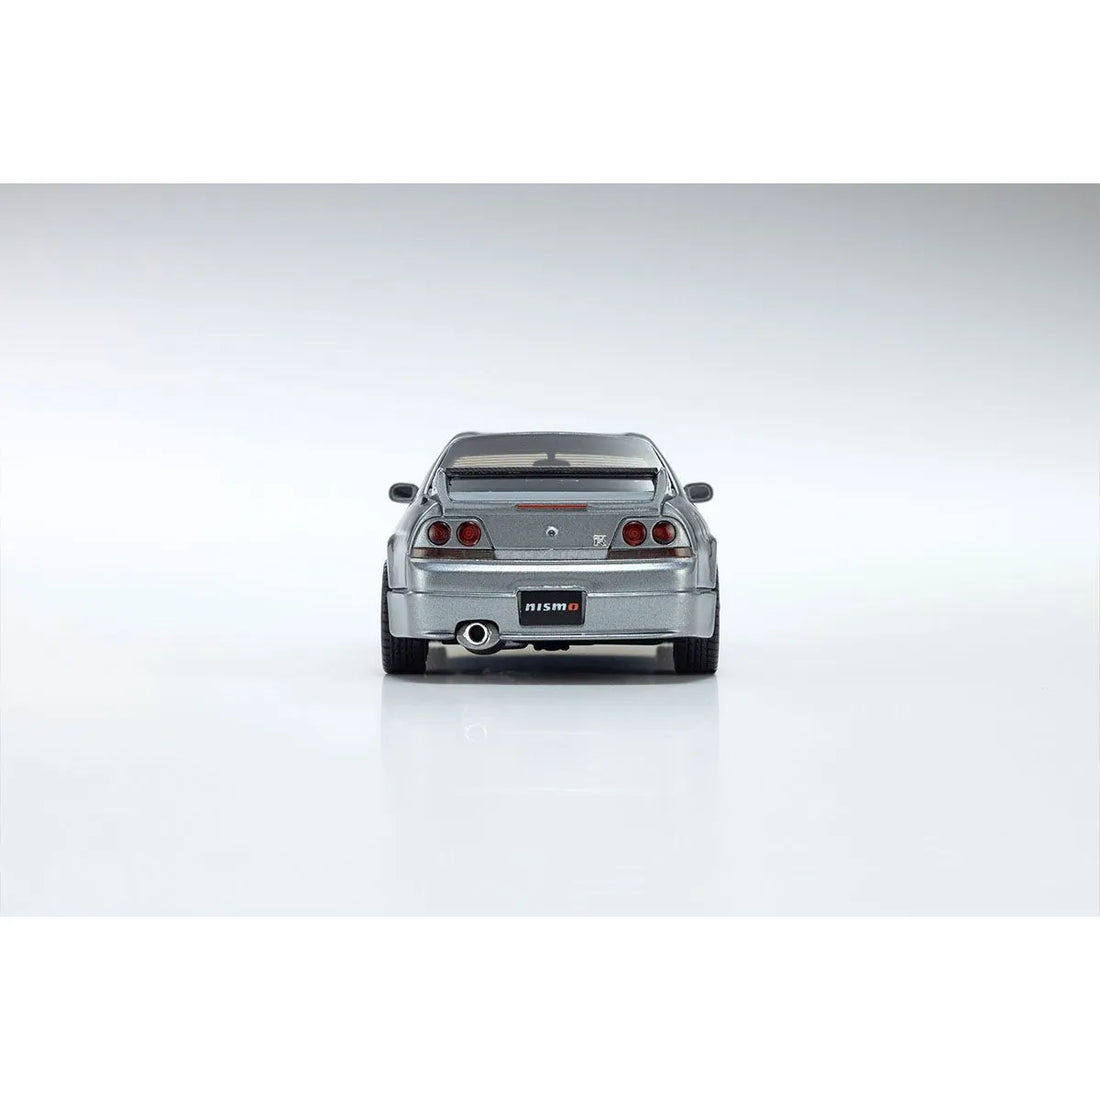 Nissan Skyline GT-R R33 NISMO Grand Touring Car (Gray) - 1:43 Scale Resin Model Car